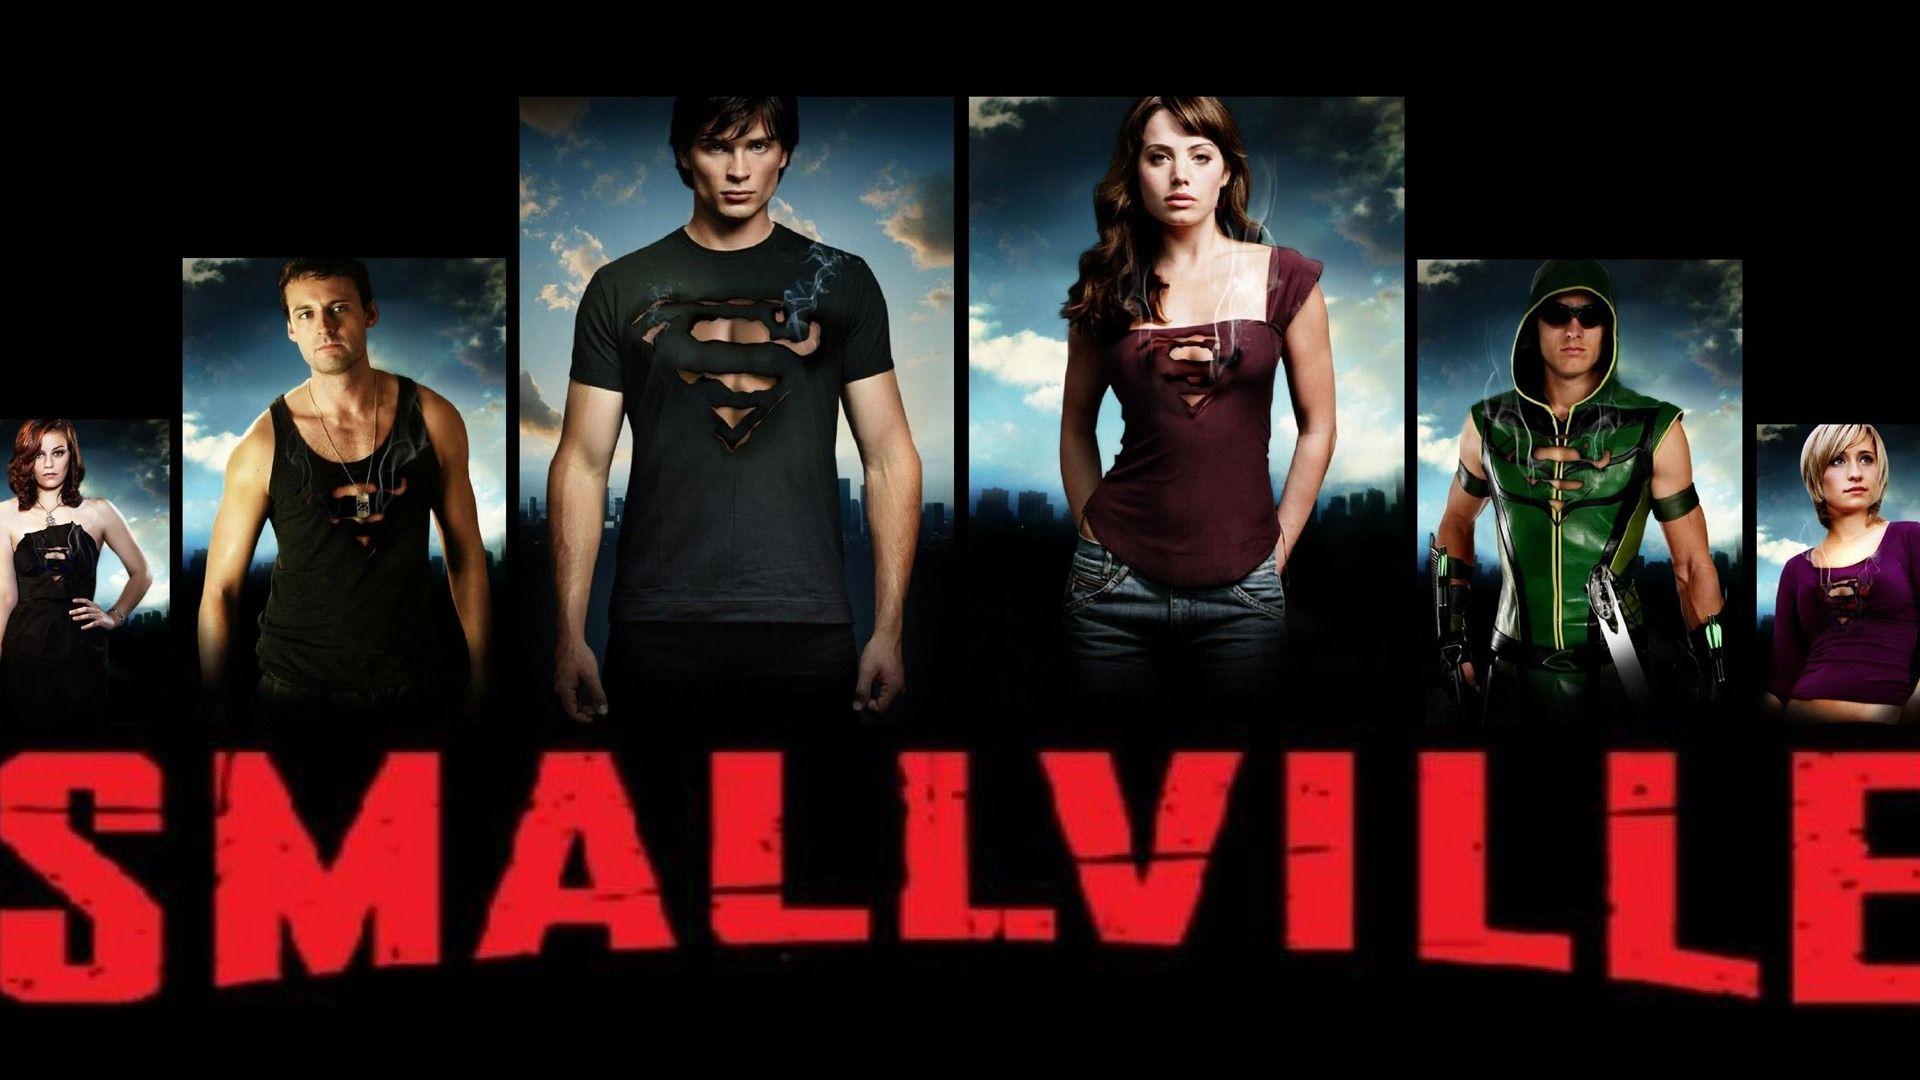 Smallville HD Wallpaper for desktop download